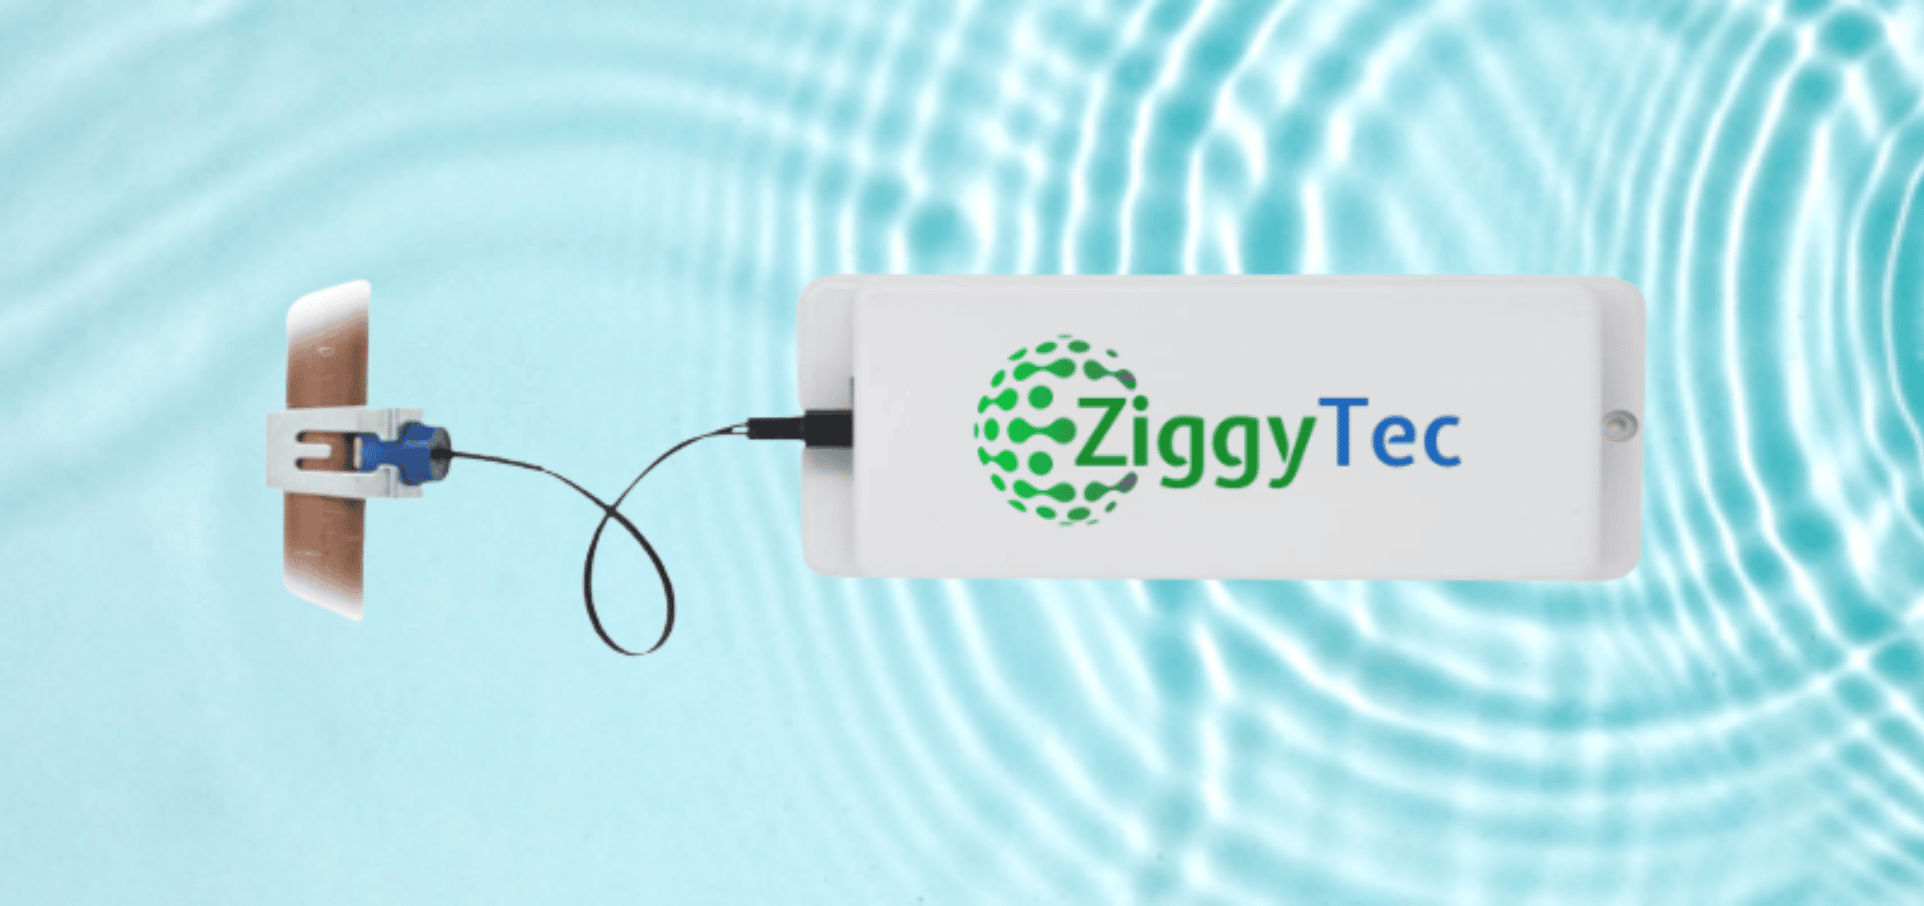 ZiggyTec Smart Legionella Control